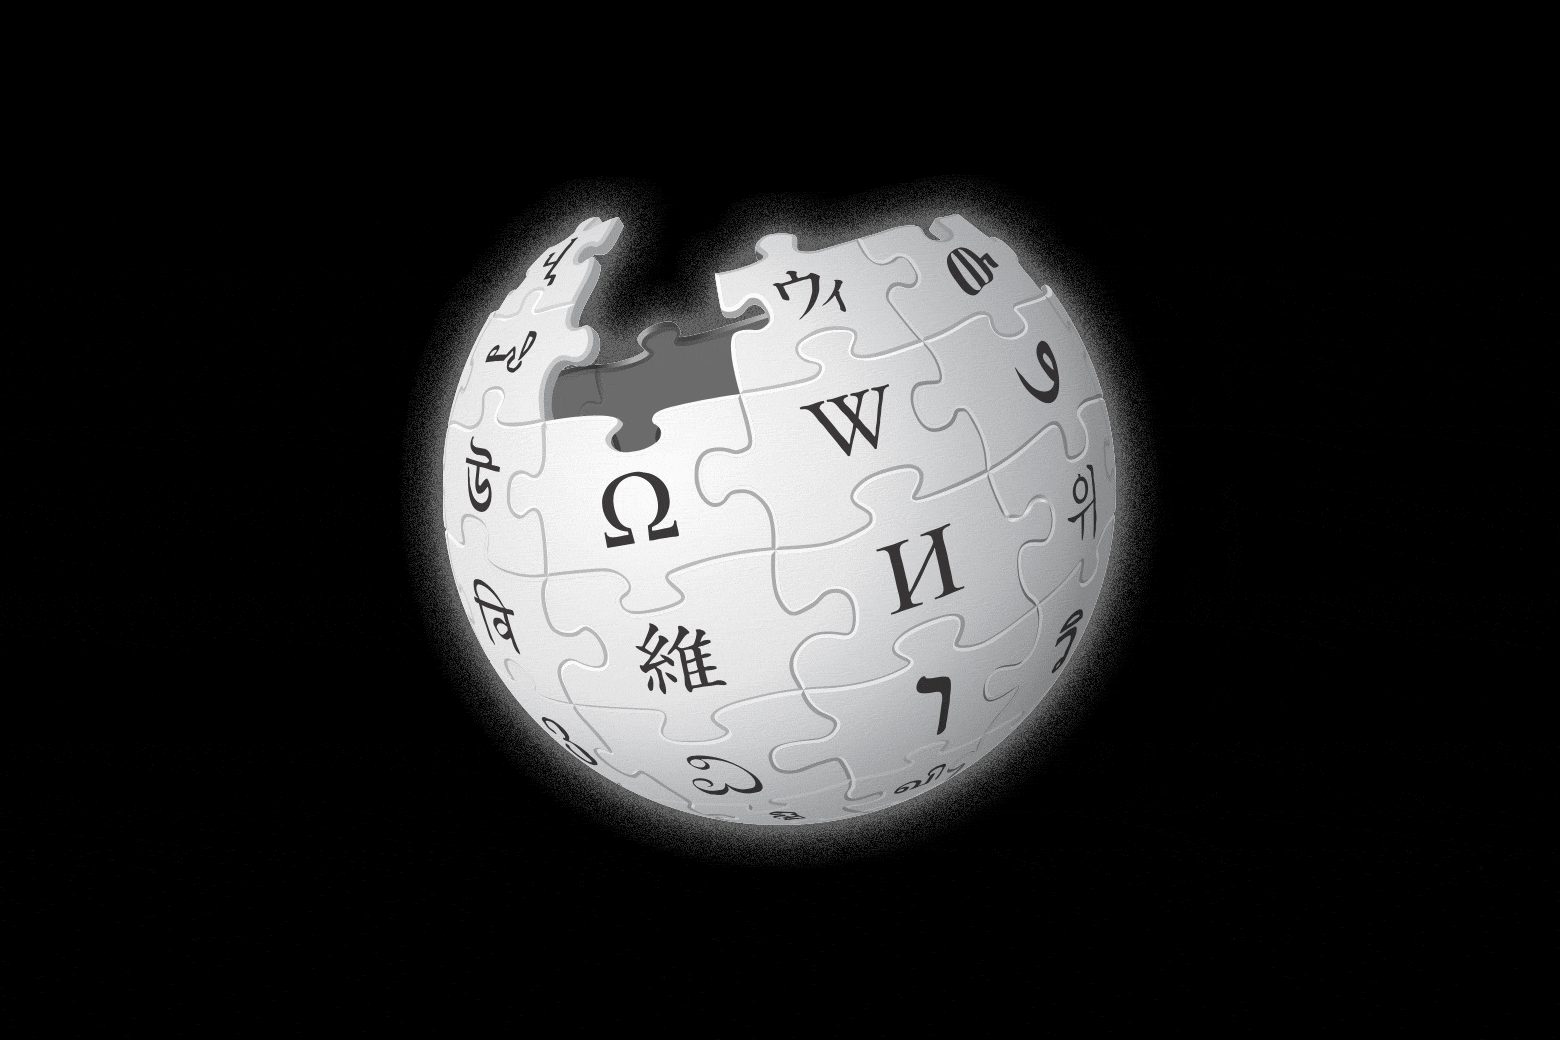 A flickering Wikipedia logo